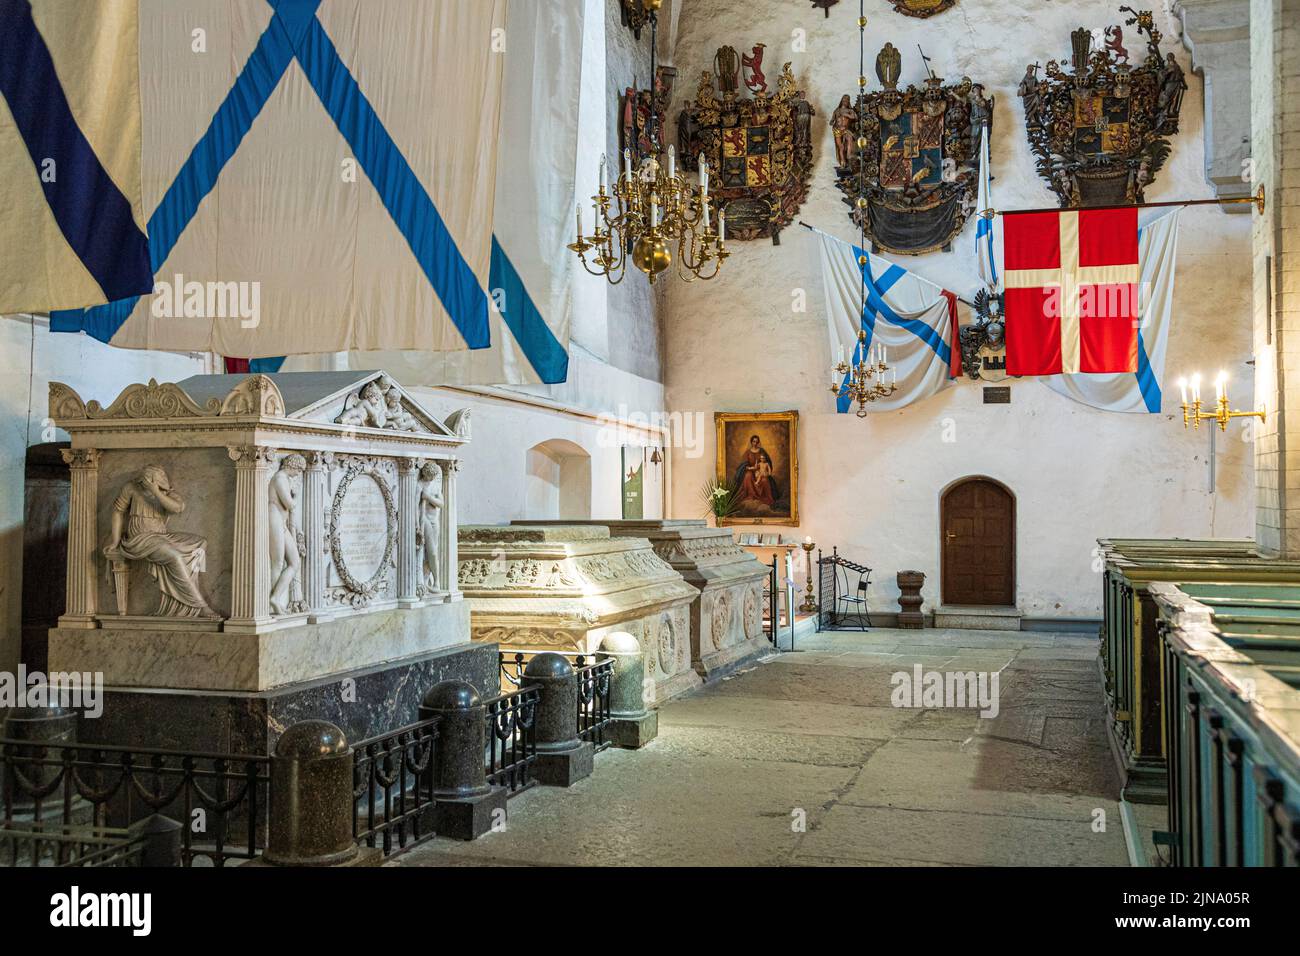 El interior de la Catedral de Santa María (Iglesia de la cúpula) (Piiskoplik Toomkirik) en el casco antiguo de Tallinn, la capital de Estonia Foto de stock